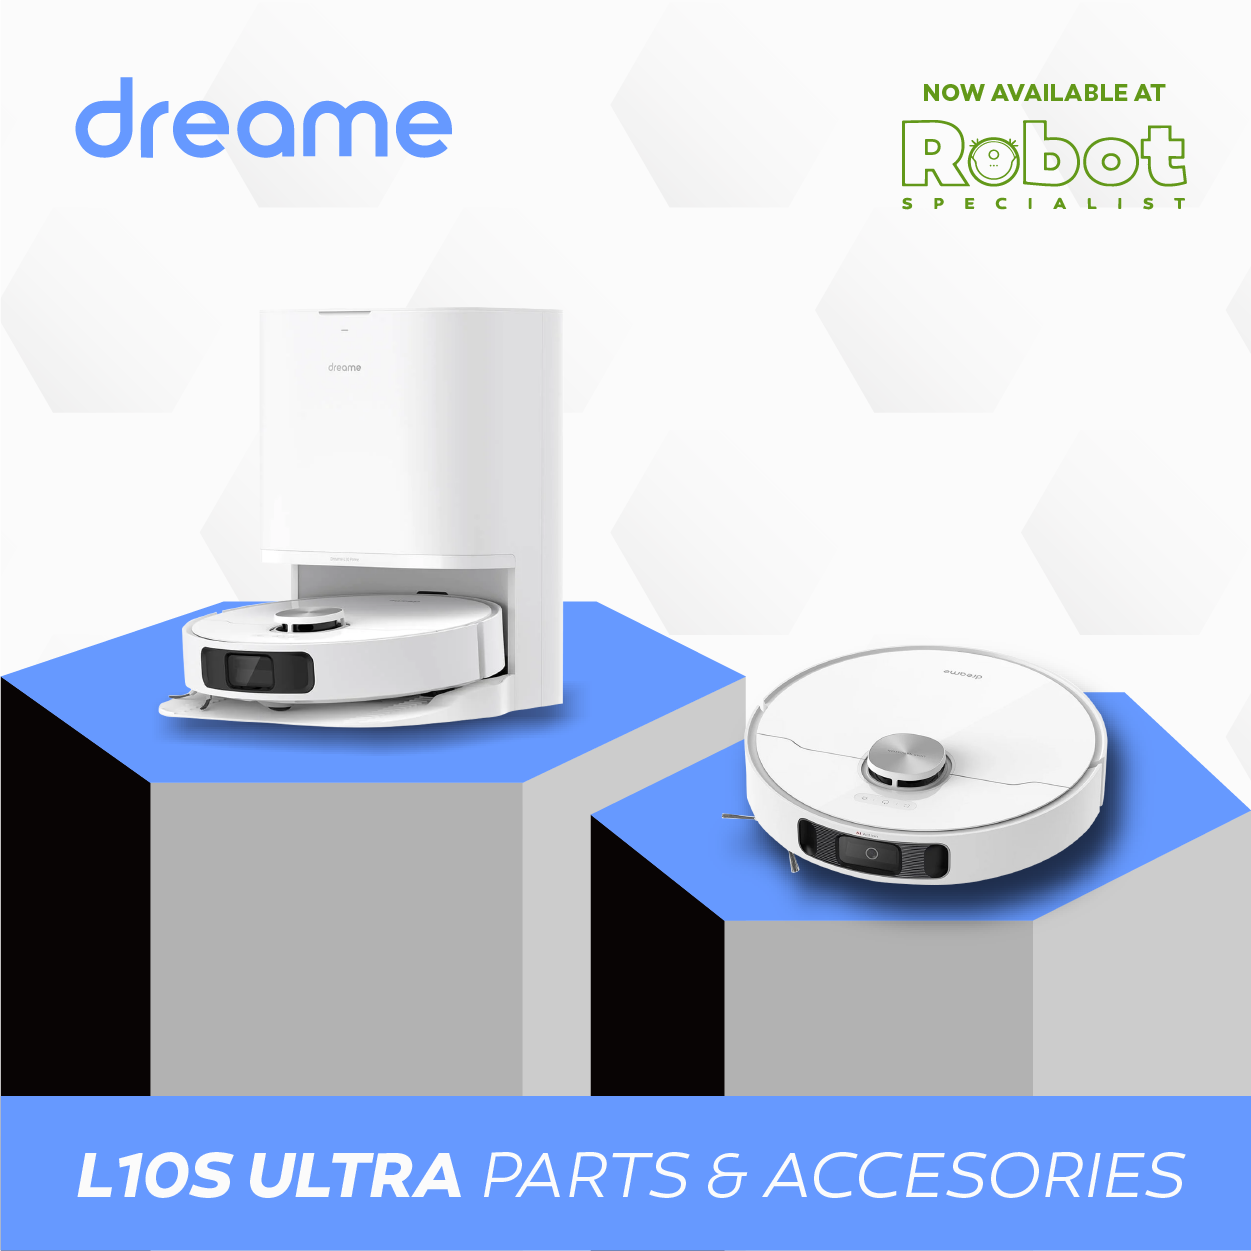 Dreame L10s Ultra: A Review